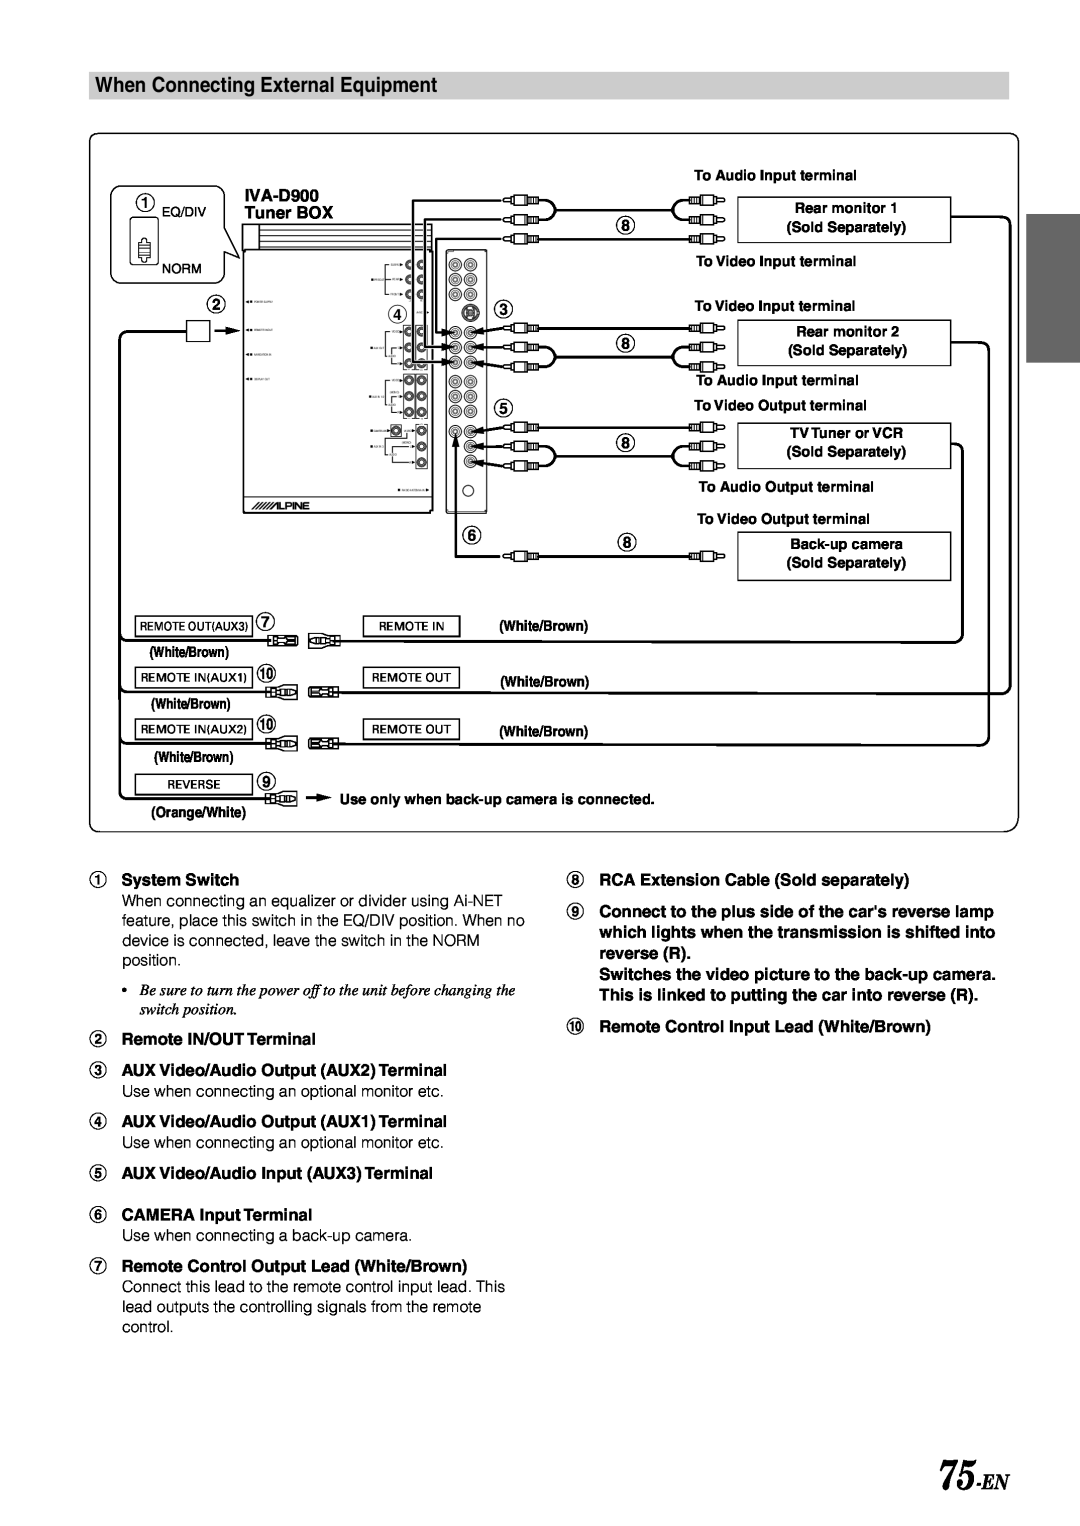 Alpine IVA-D900 owner manual When Connecting External Equipment, 75-EN, 5 8 